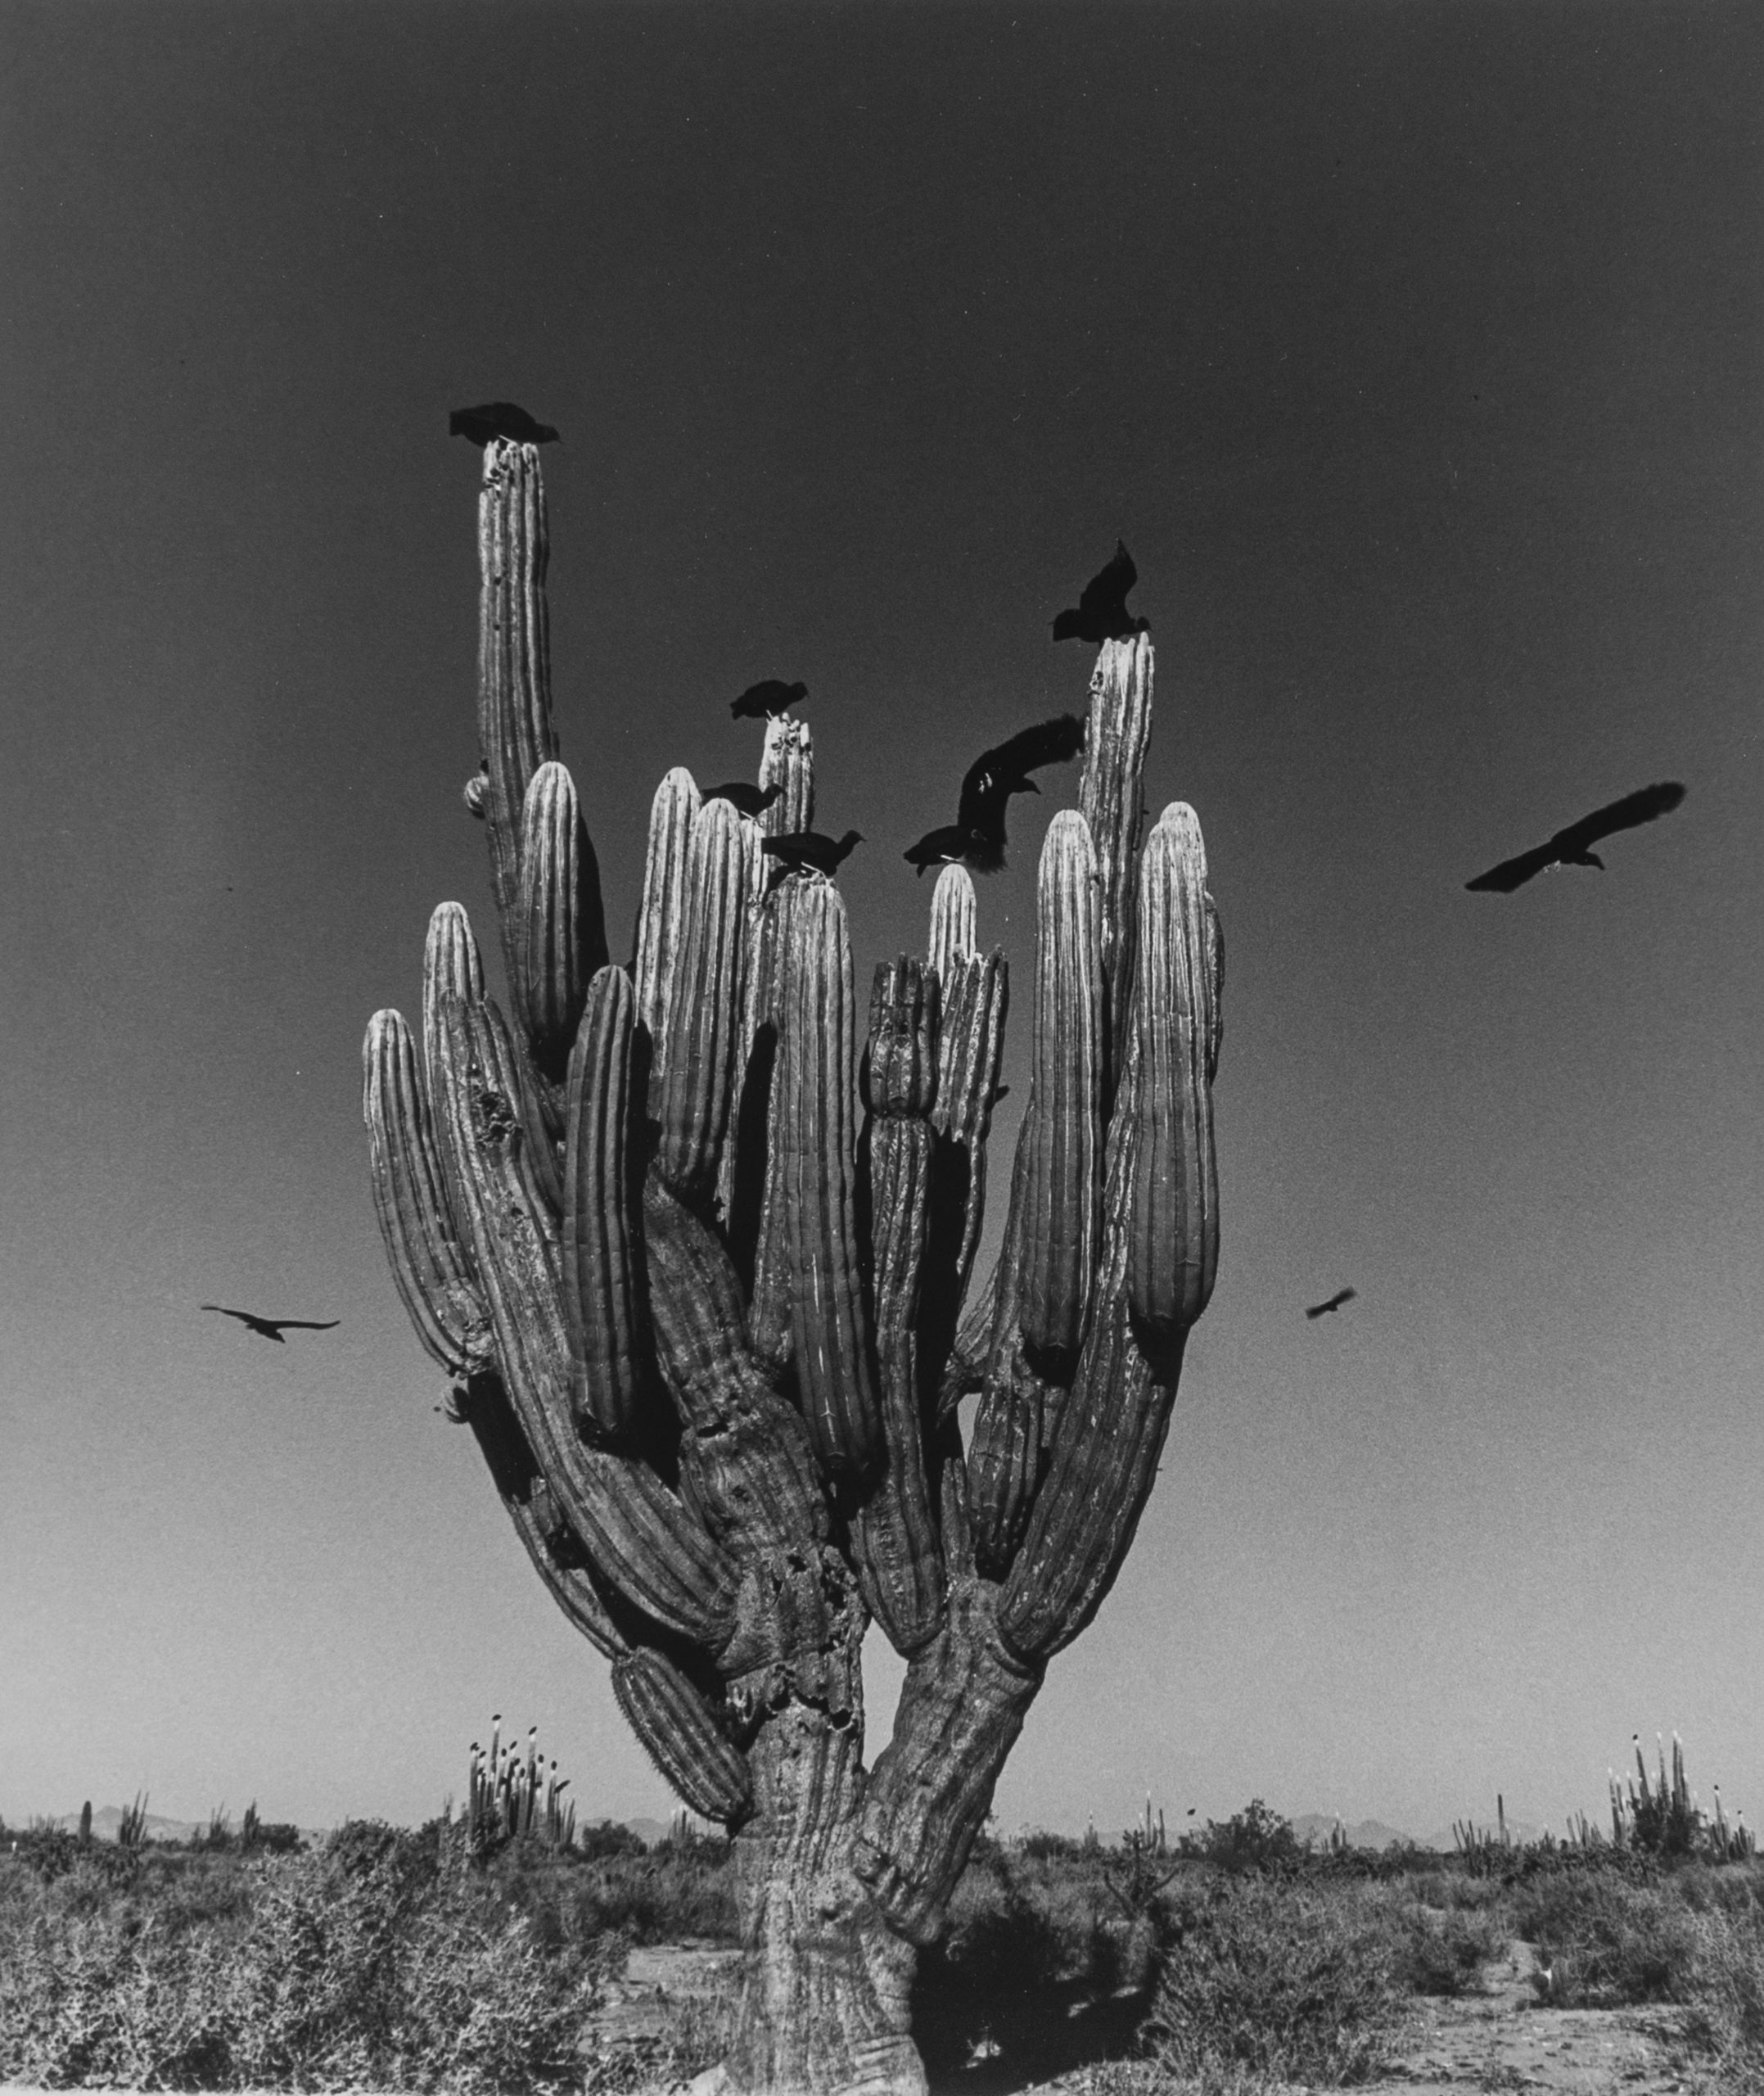 Saguaro, Sonoran Desert, 1979